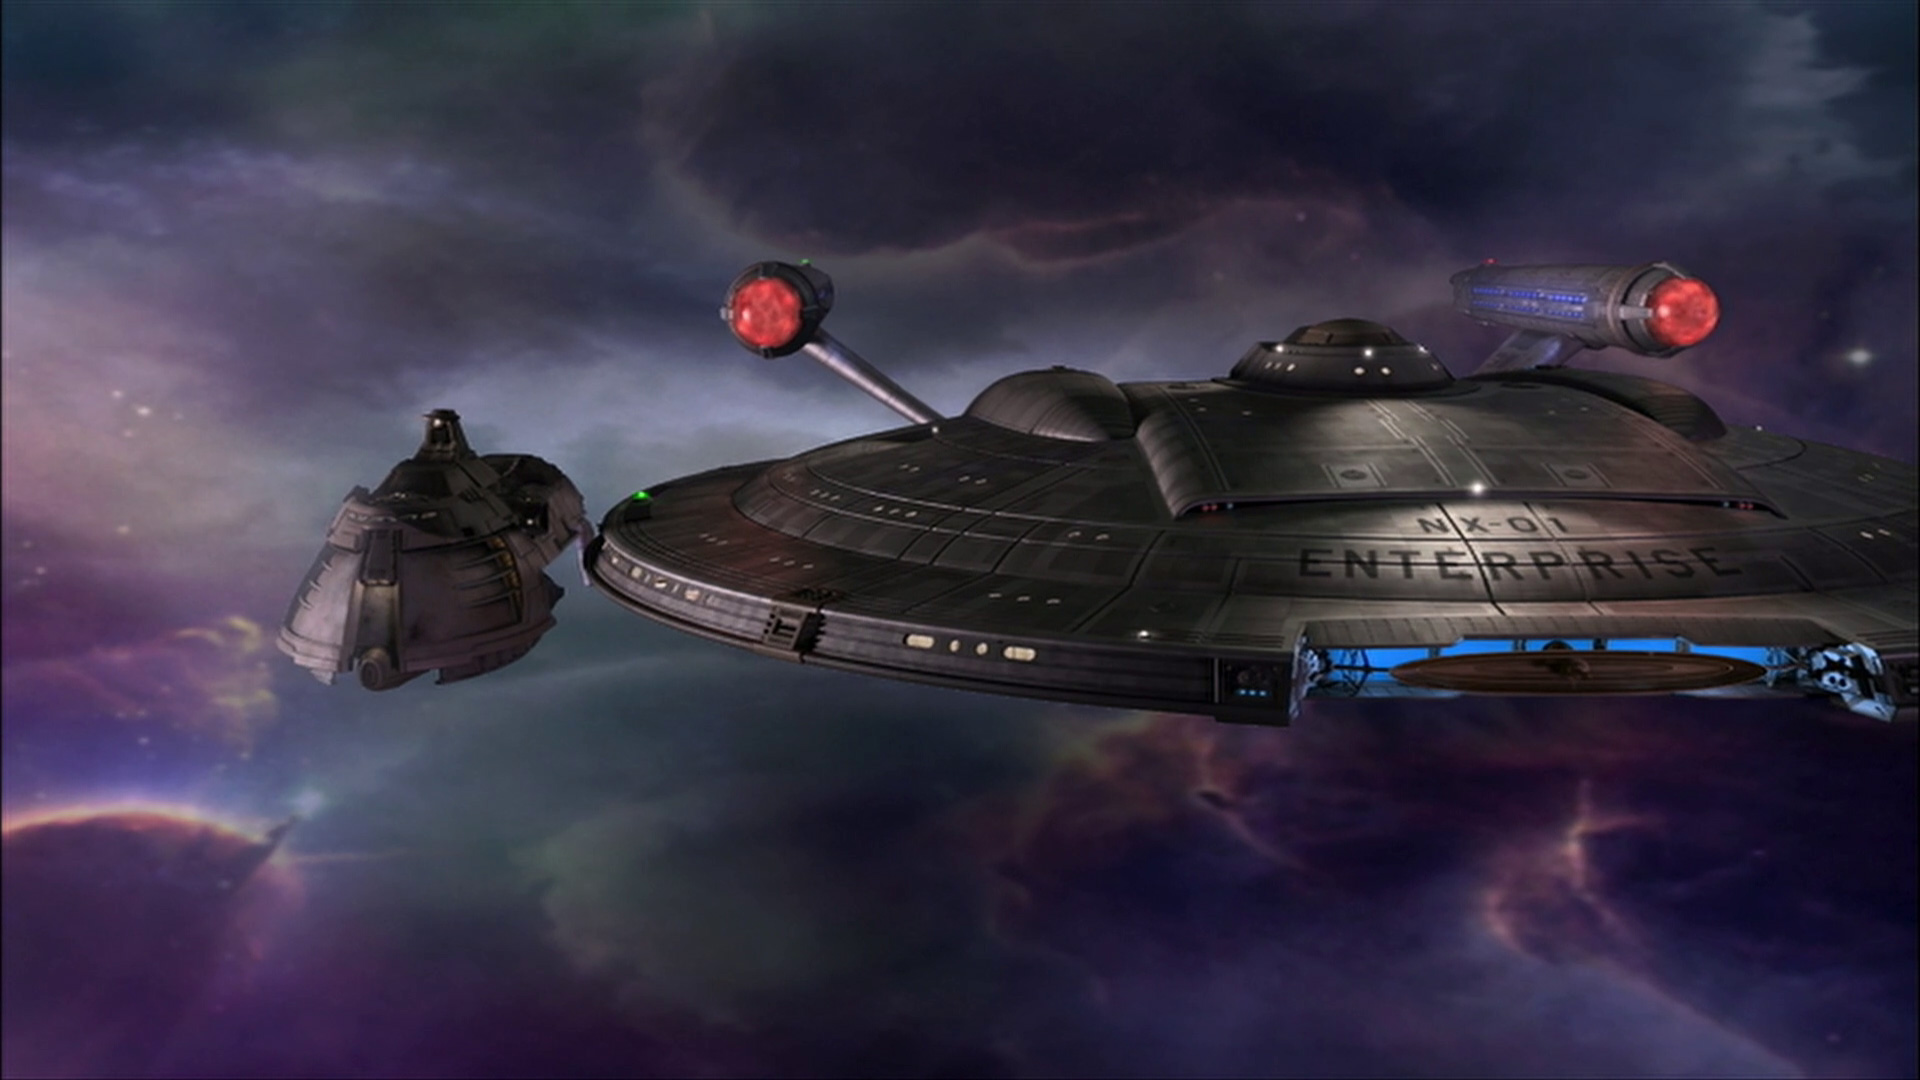 Star Trek Enterprise Wallpaper Pictures Image